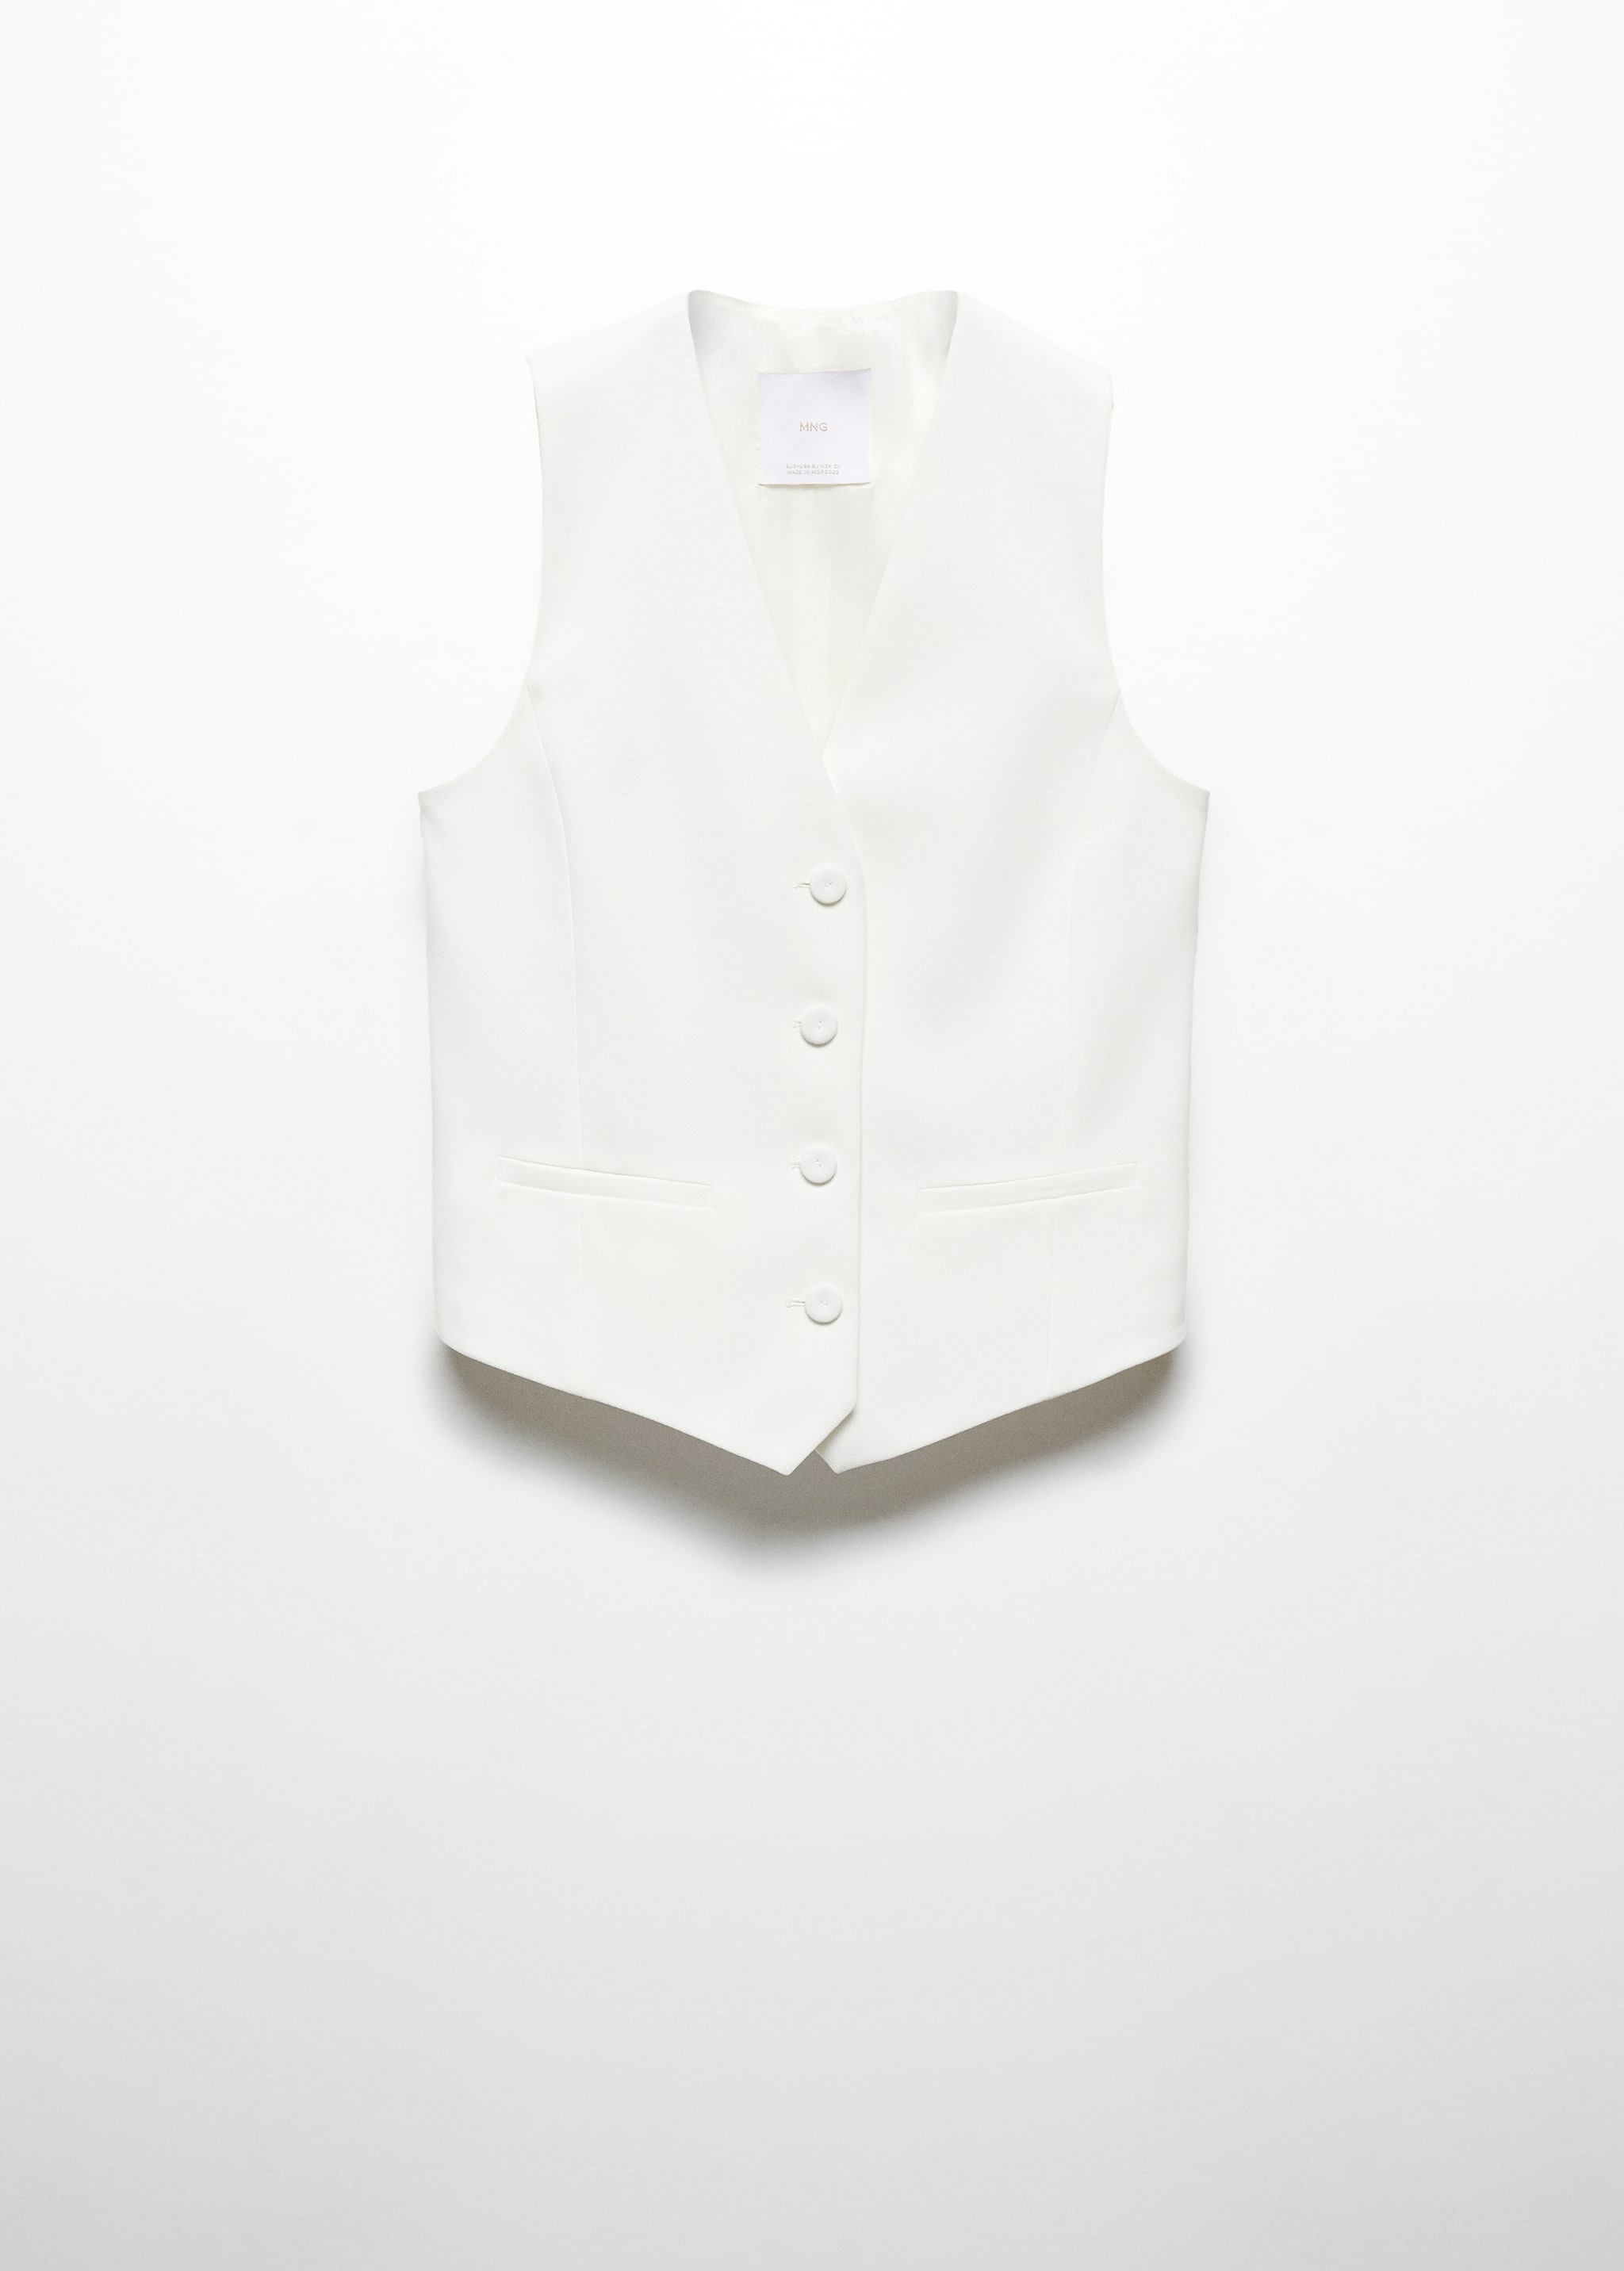 Armilla vestit botons - Article sense model